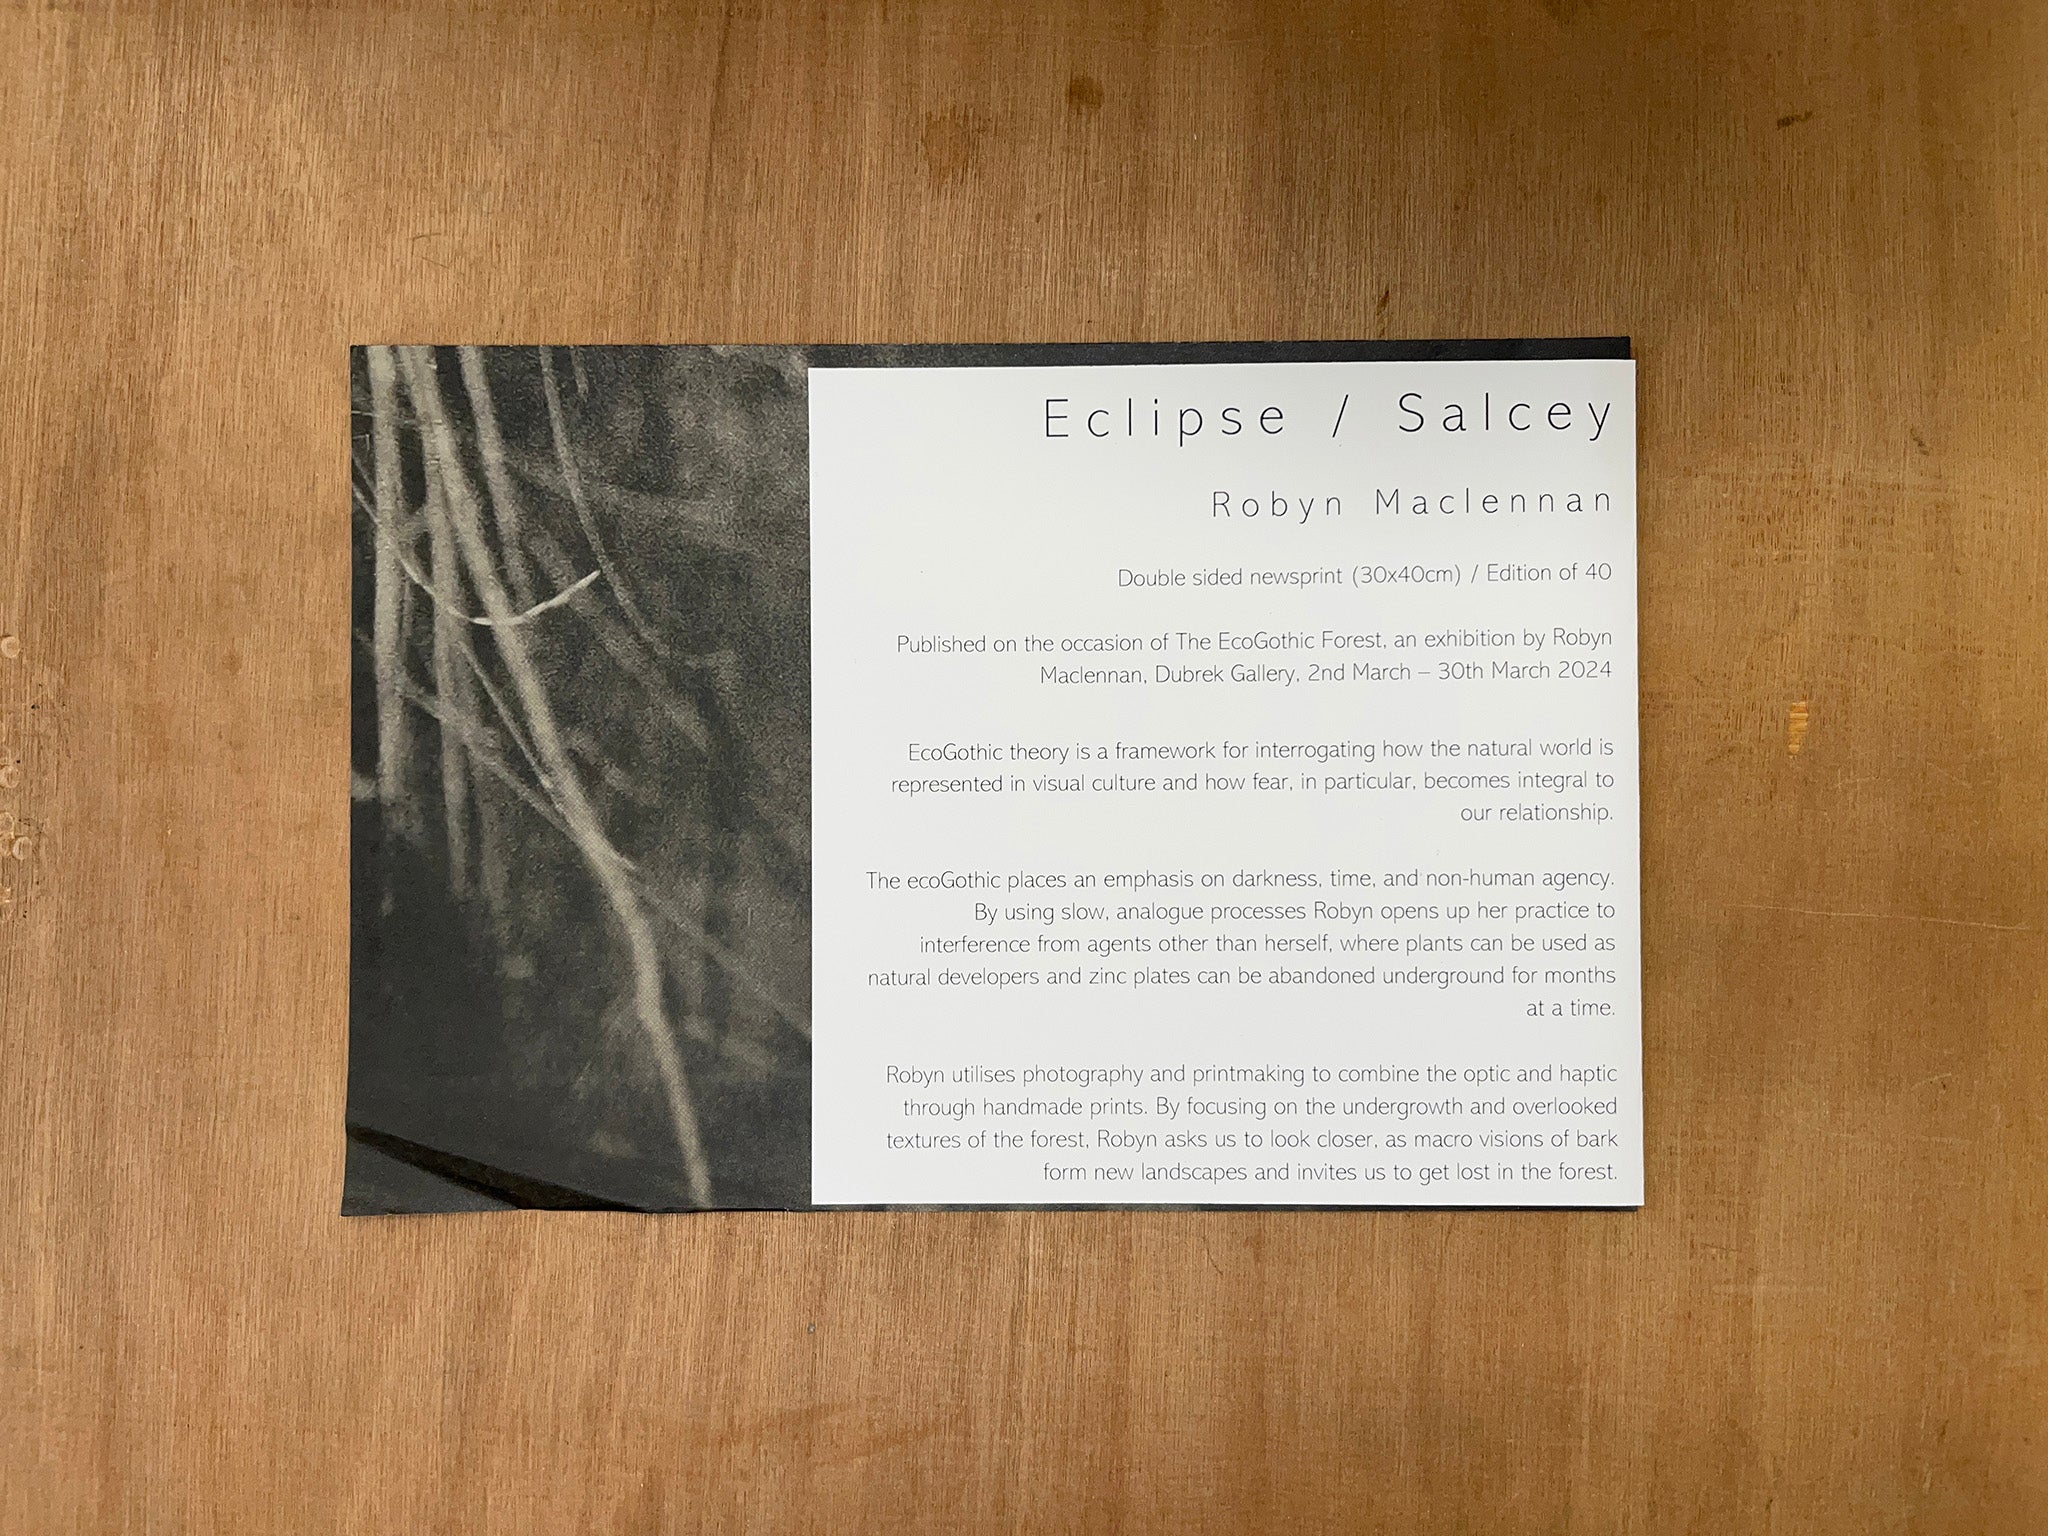 ECLIPSE / SALCEY by Robyn Maclennan